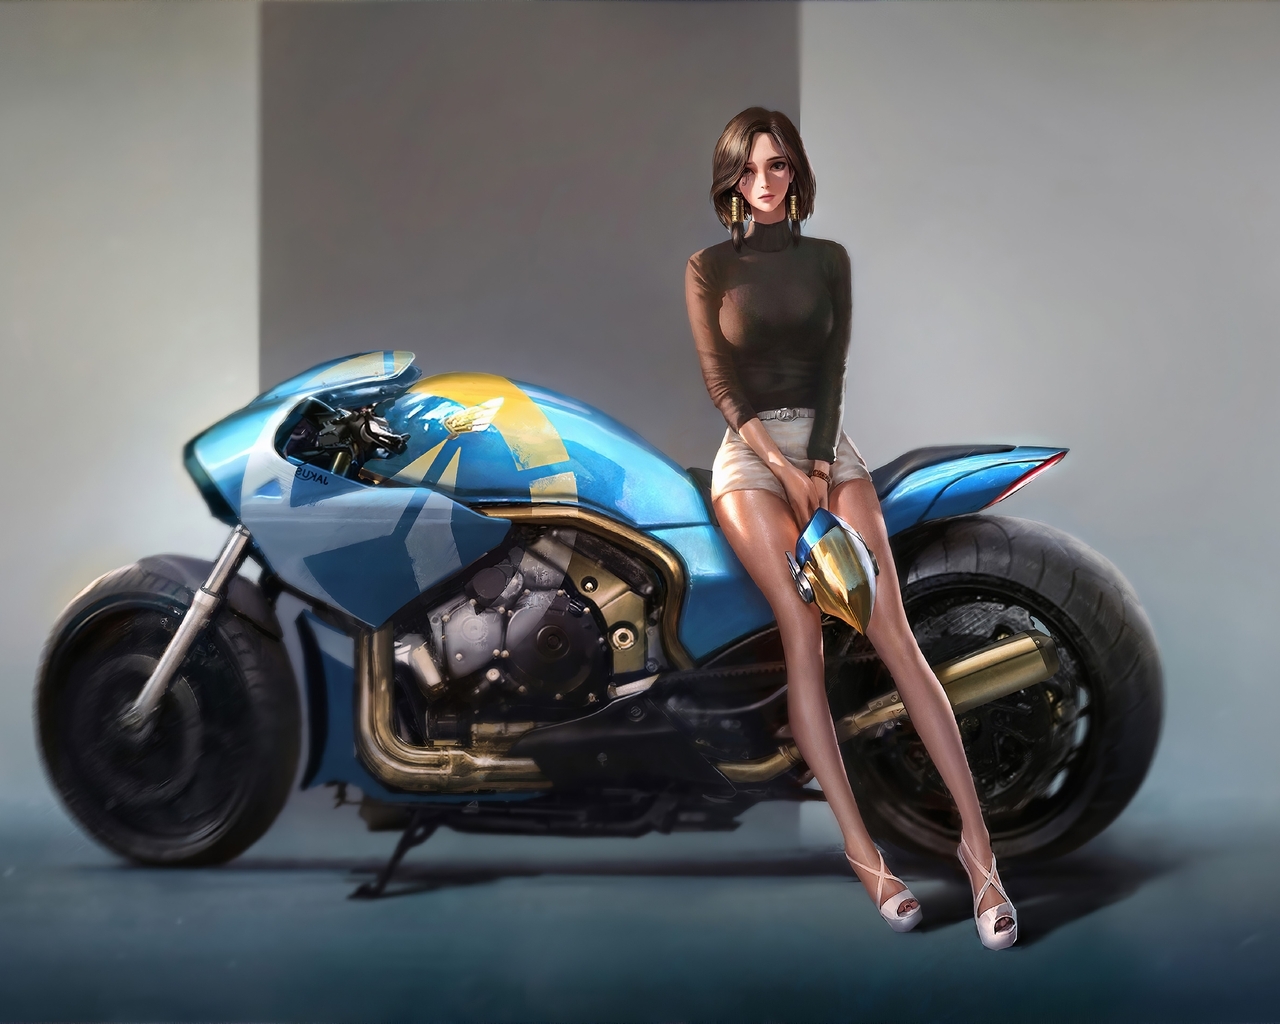 Image: Girl, Pharah, game, Overwatch, bike, background, art, legs, helmet, look